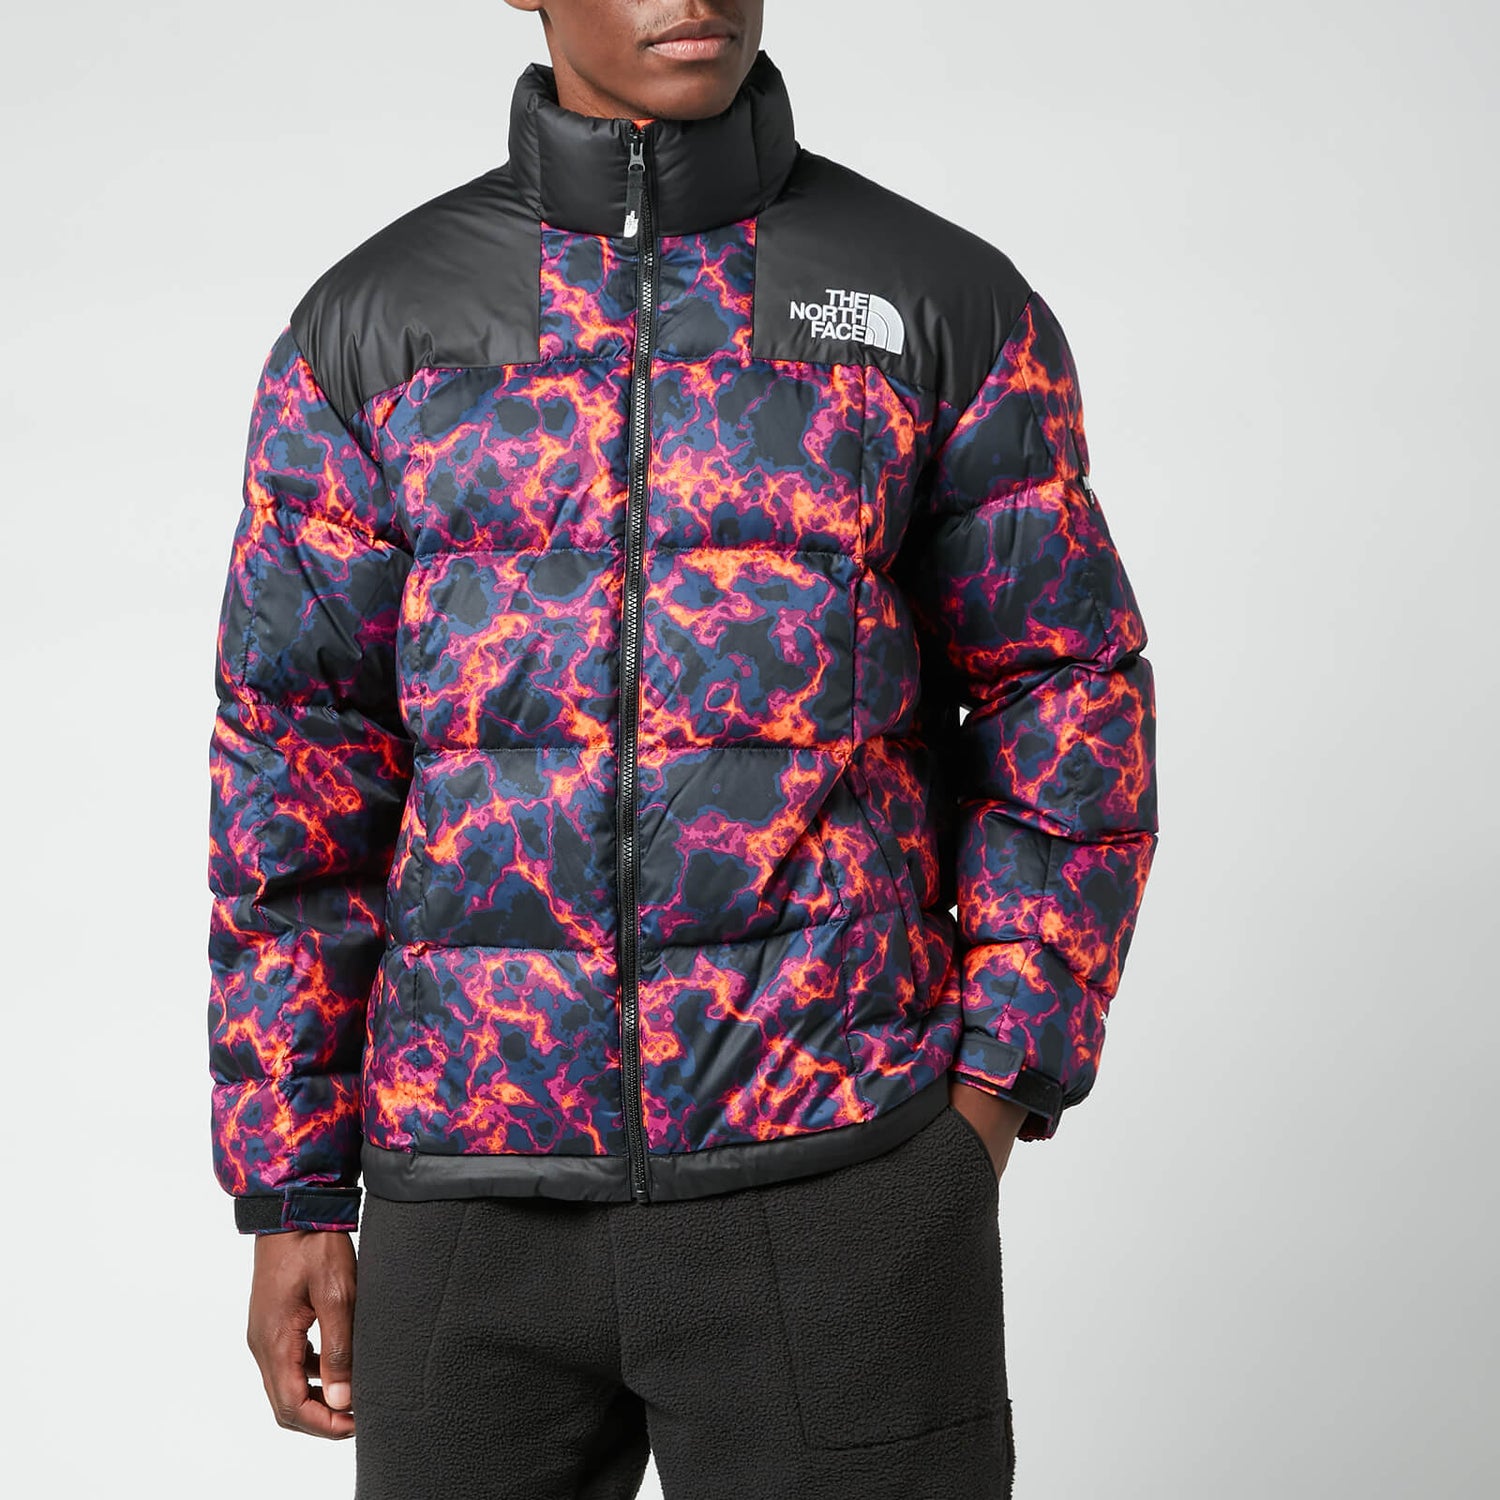 The North Face Men's Lhotse Jacket - TNF Marble Black/Flame Print